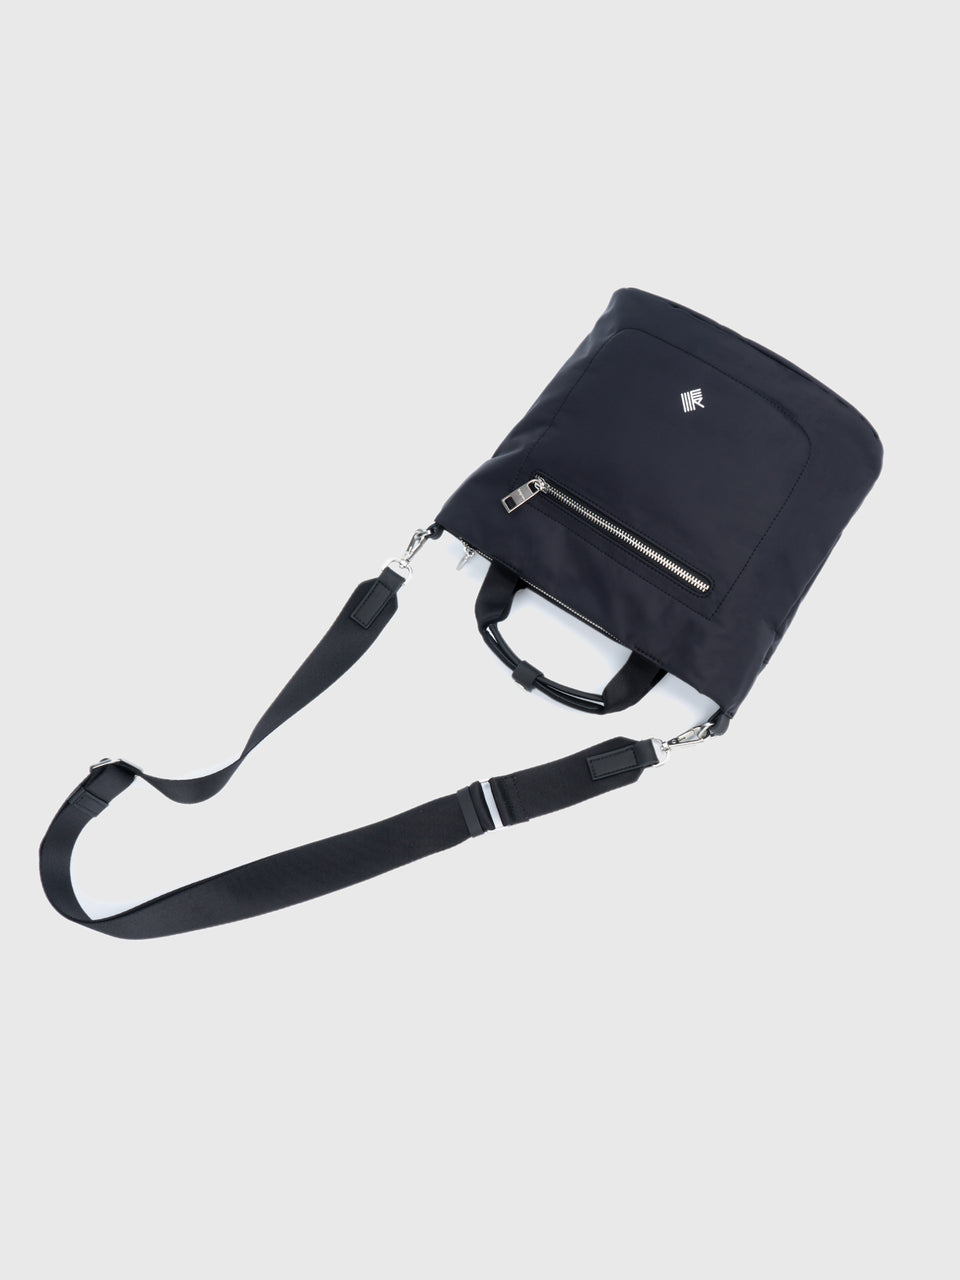 Bucket Bag - Charcoal Black